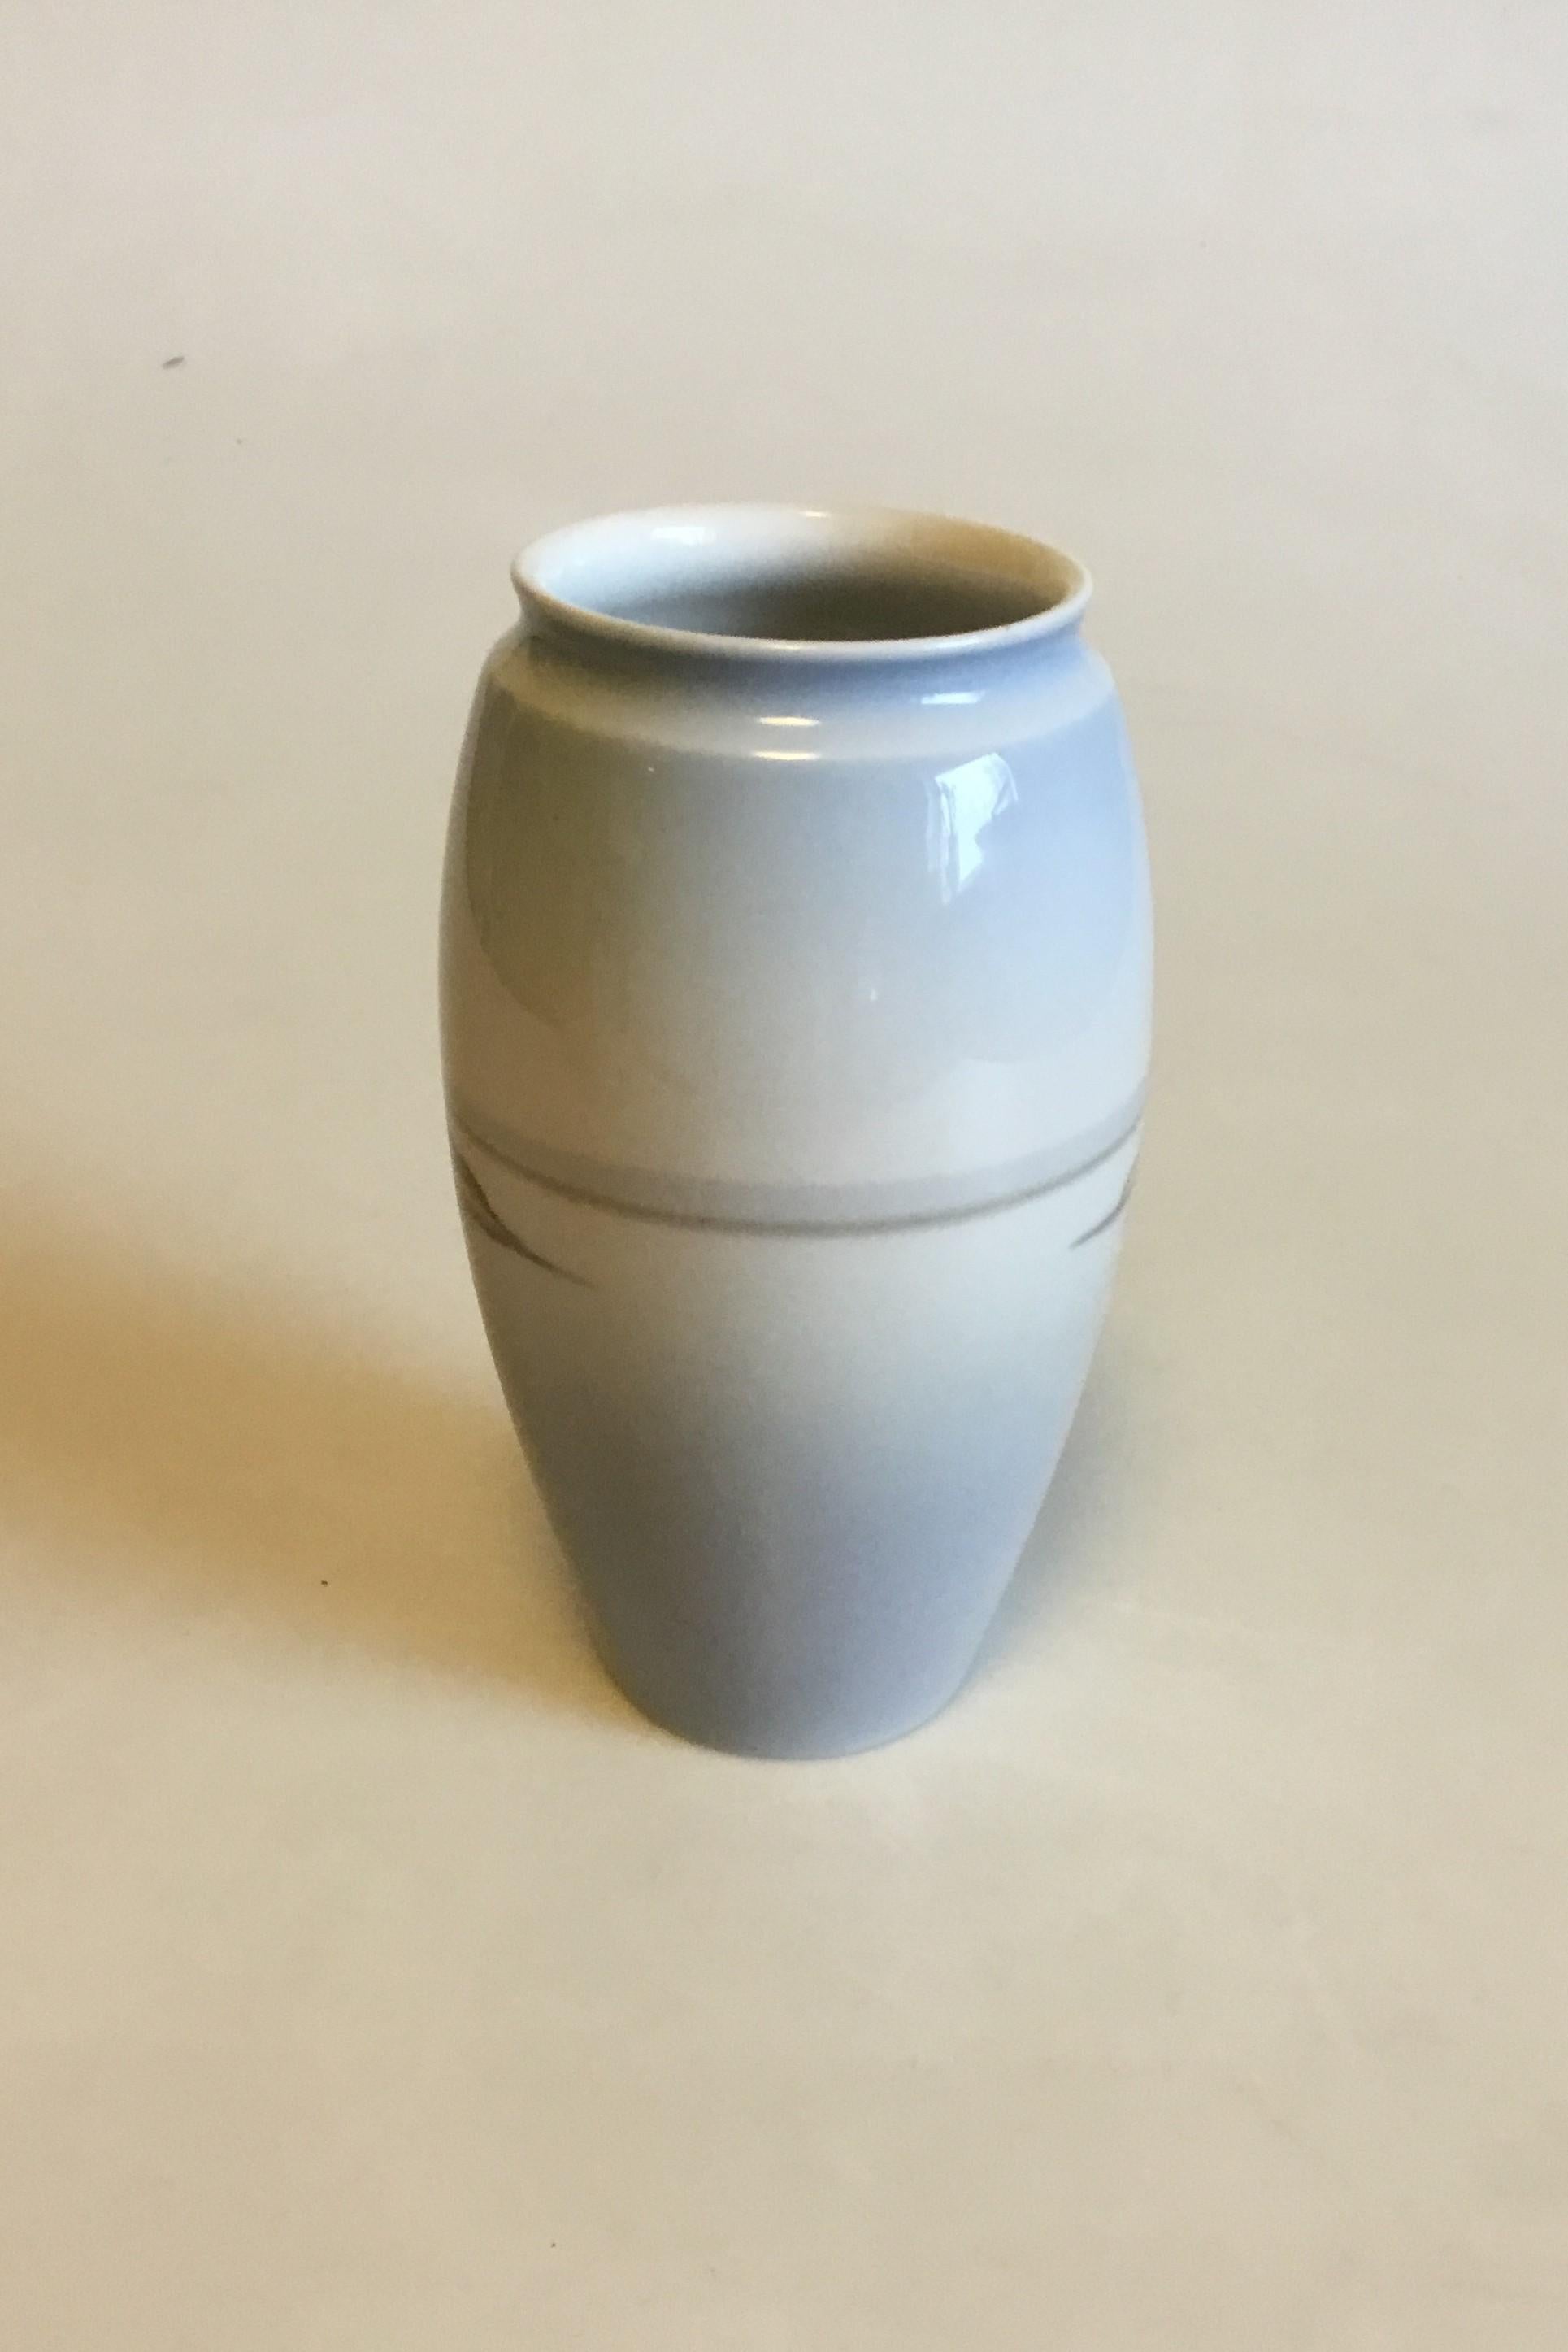 Bing & Grondahl vase no 8521/254. Measures: 13.5 cm / 5 5/16 in.